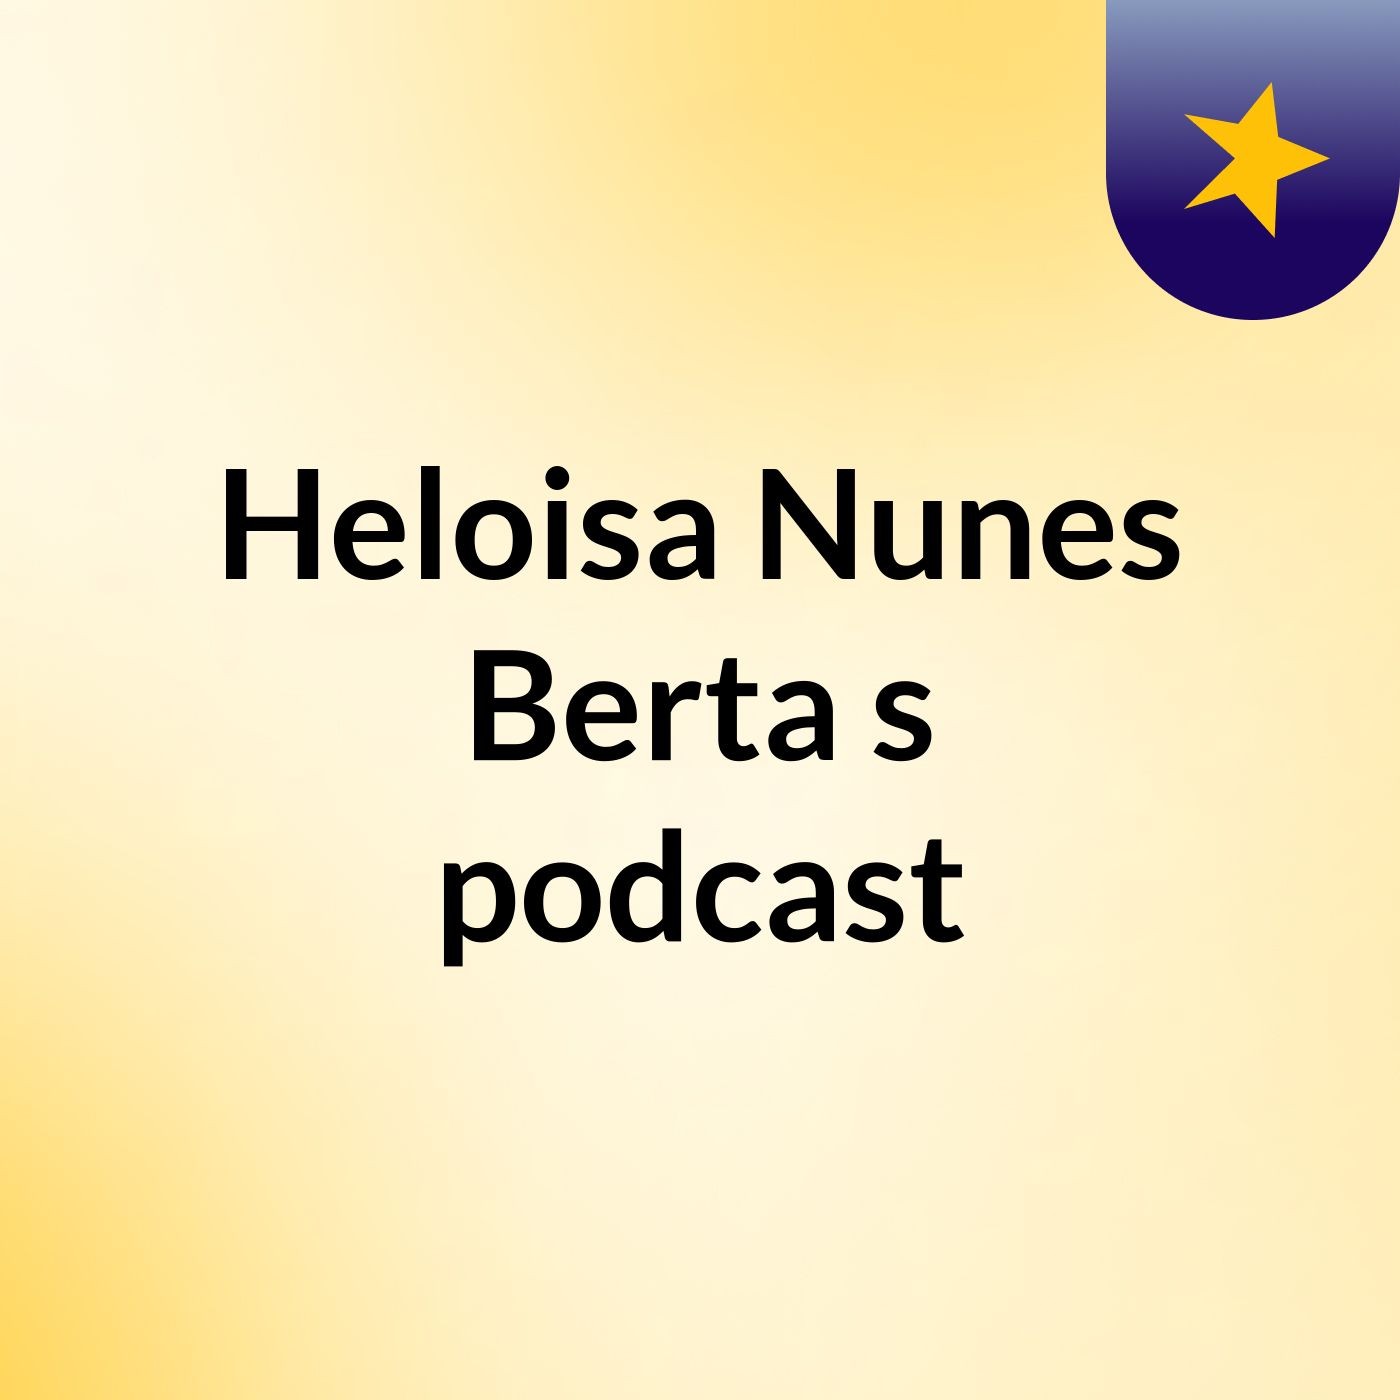 Heloisa Nunes Berta's podcast